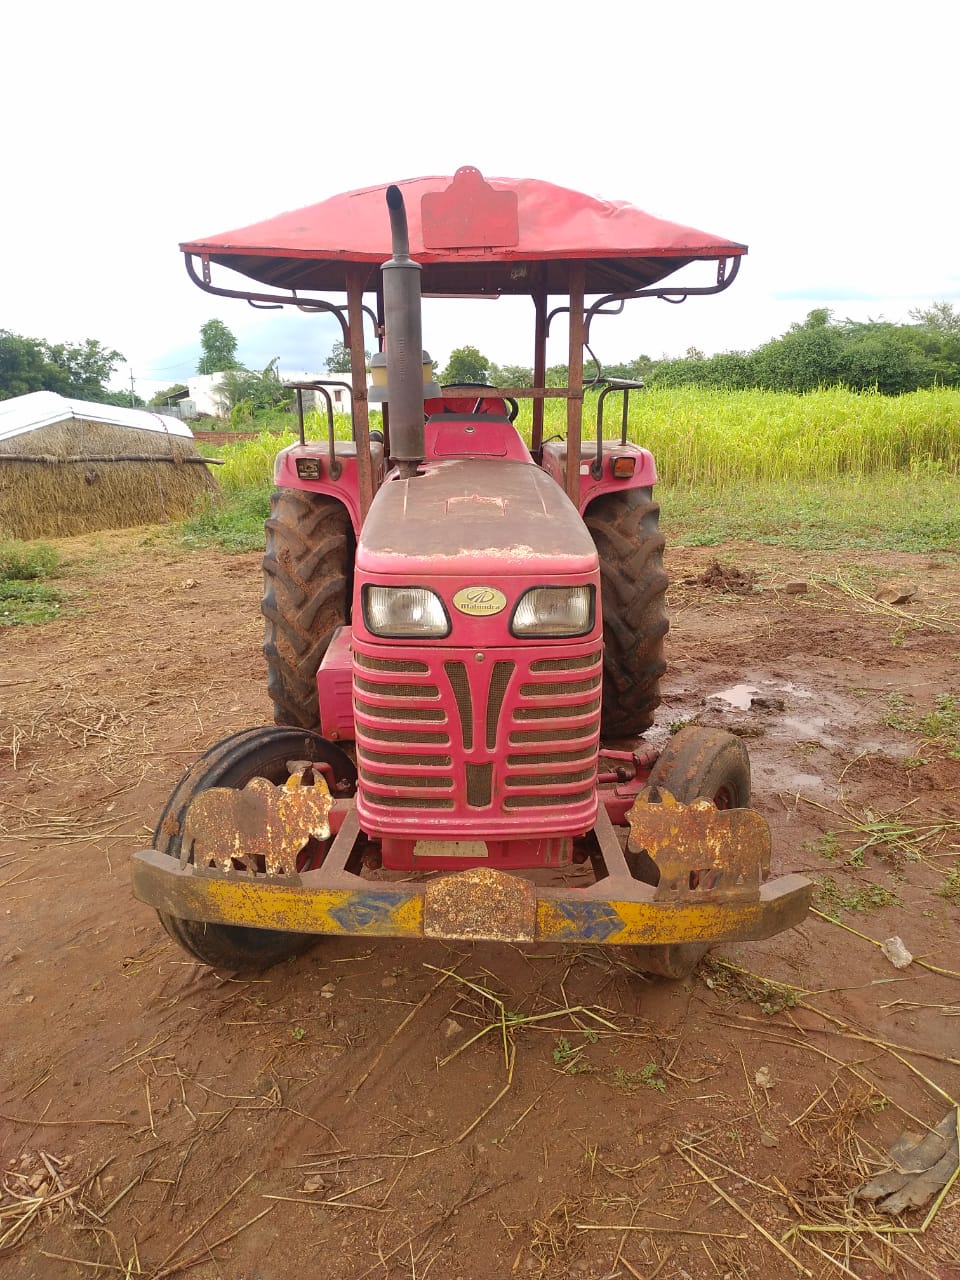 Mahindra 575 Sarpanch tractor for sales